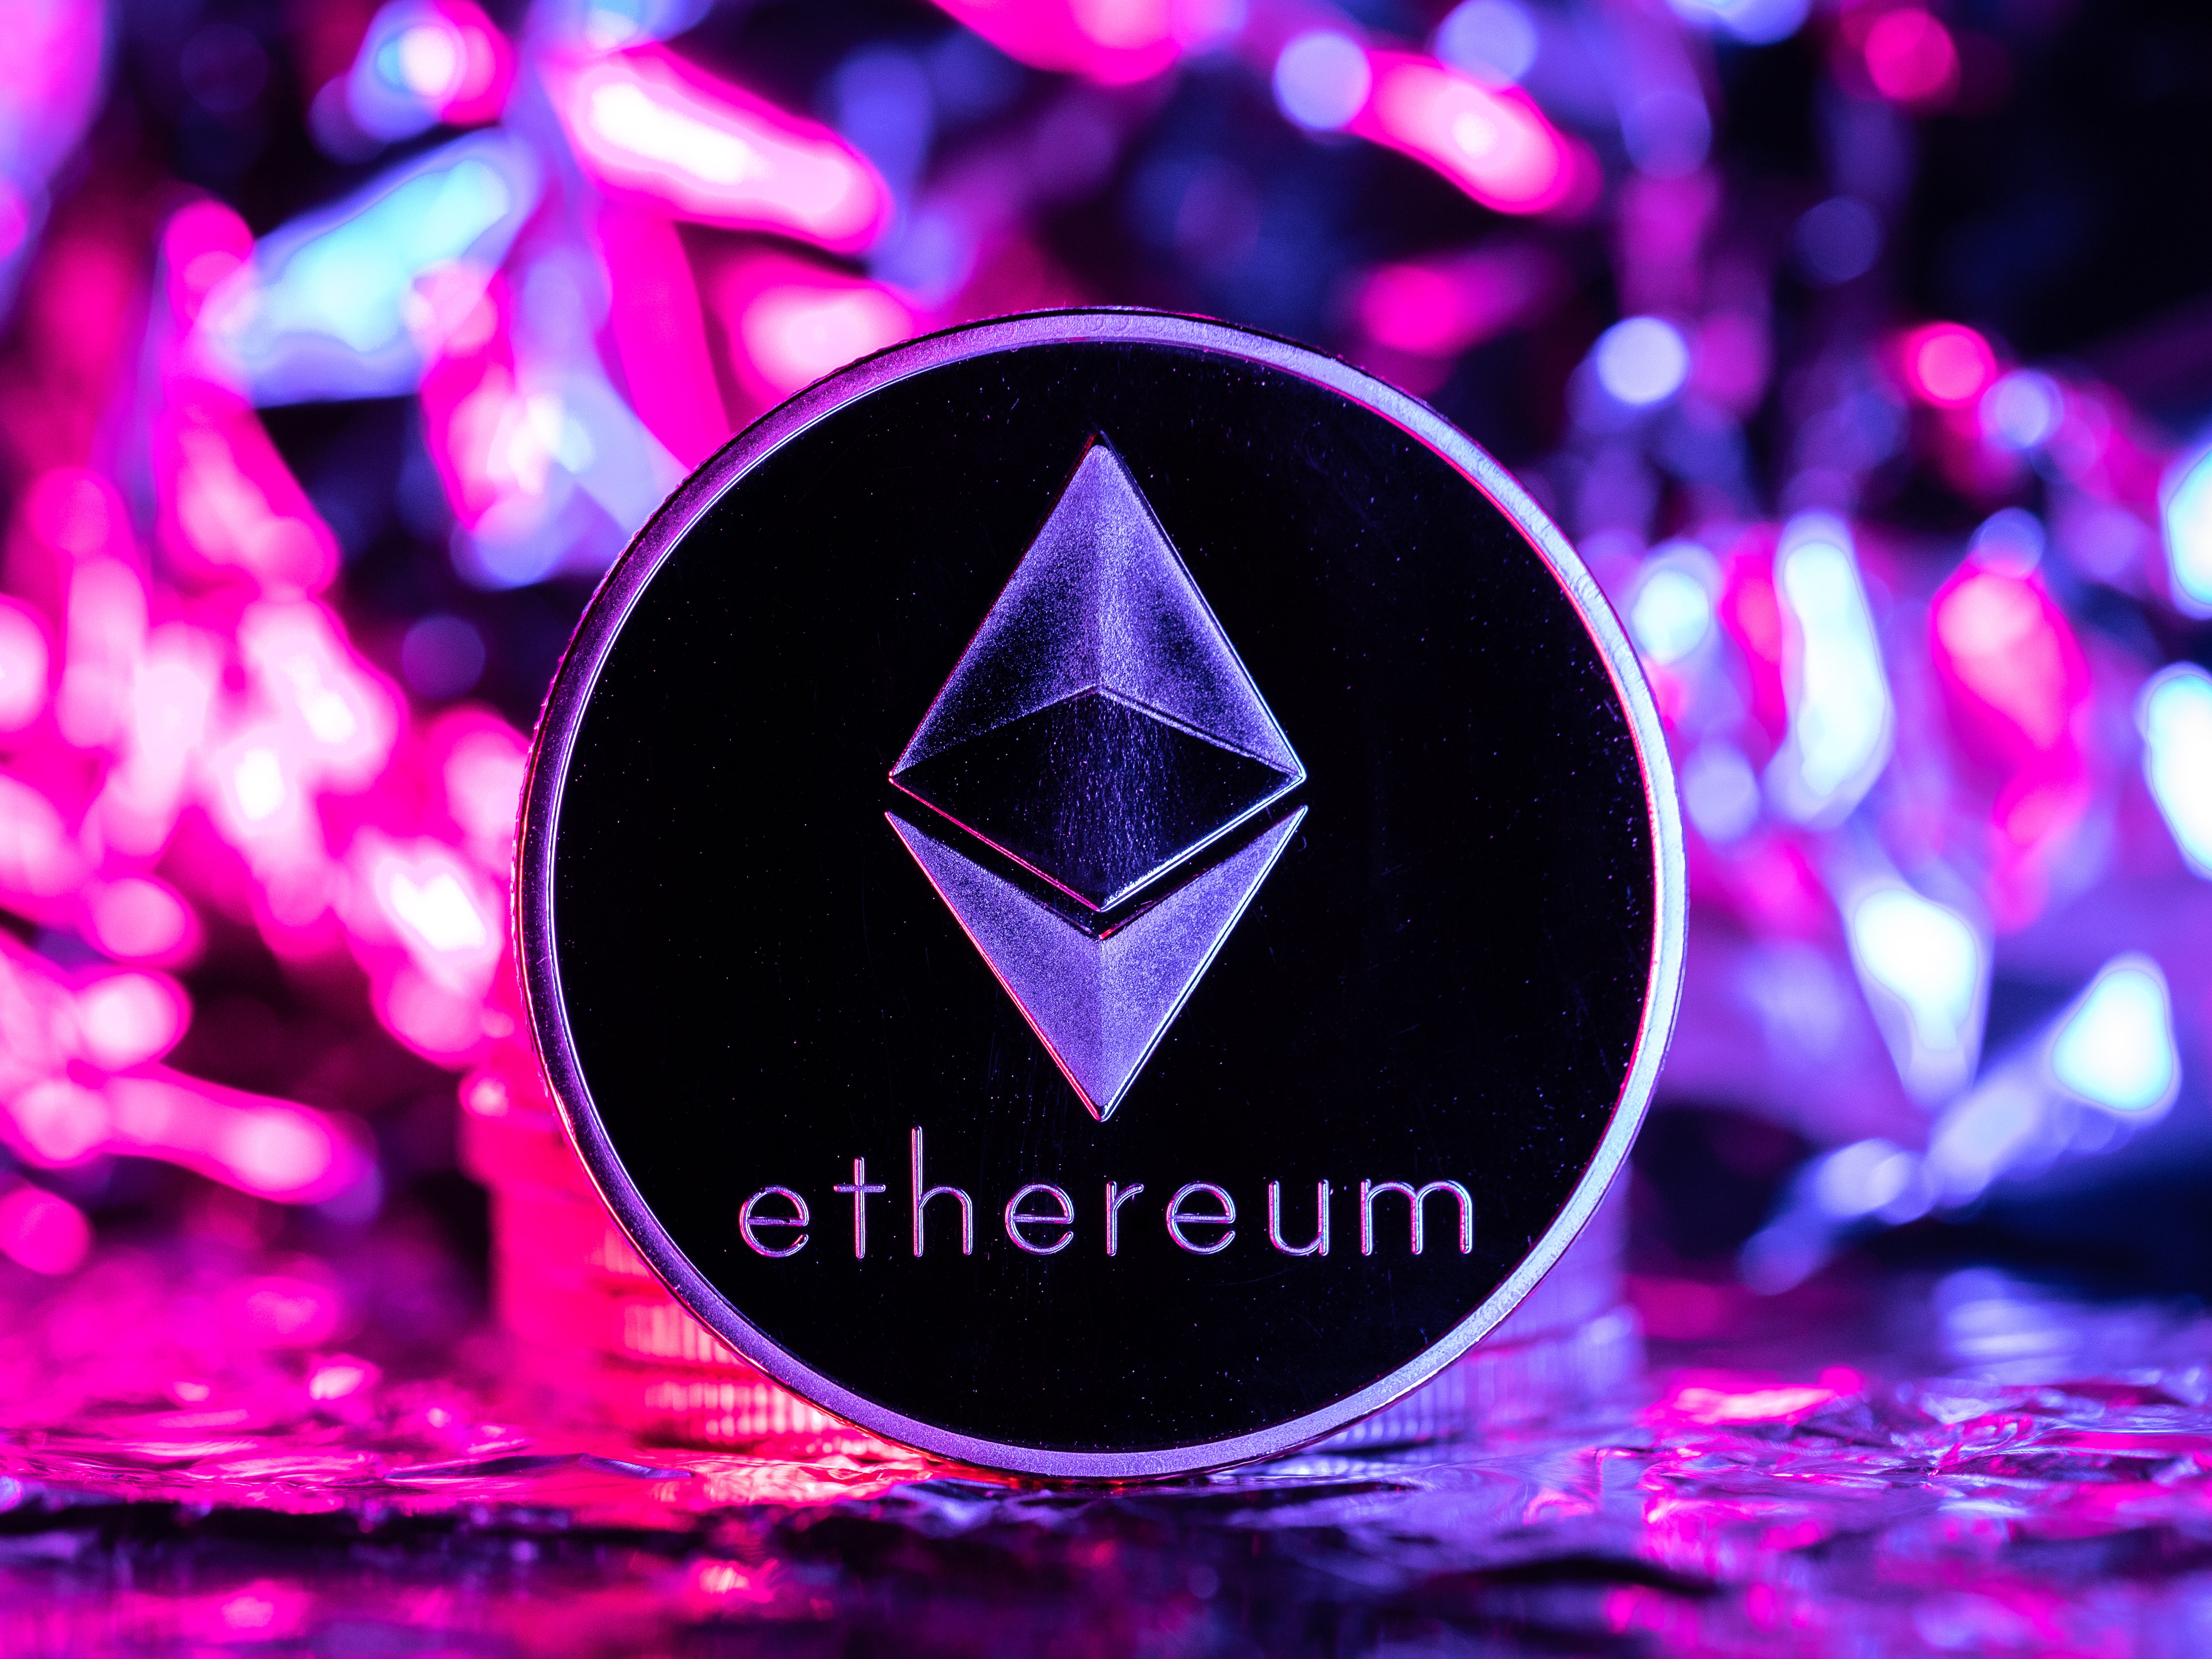 Ethereum speculation forum asic for ethereum mining